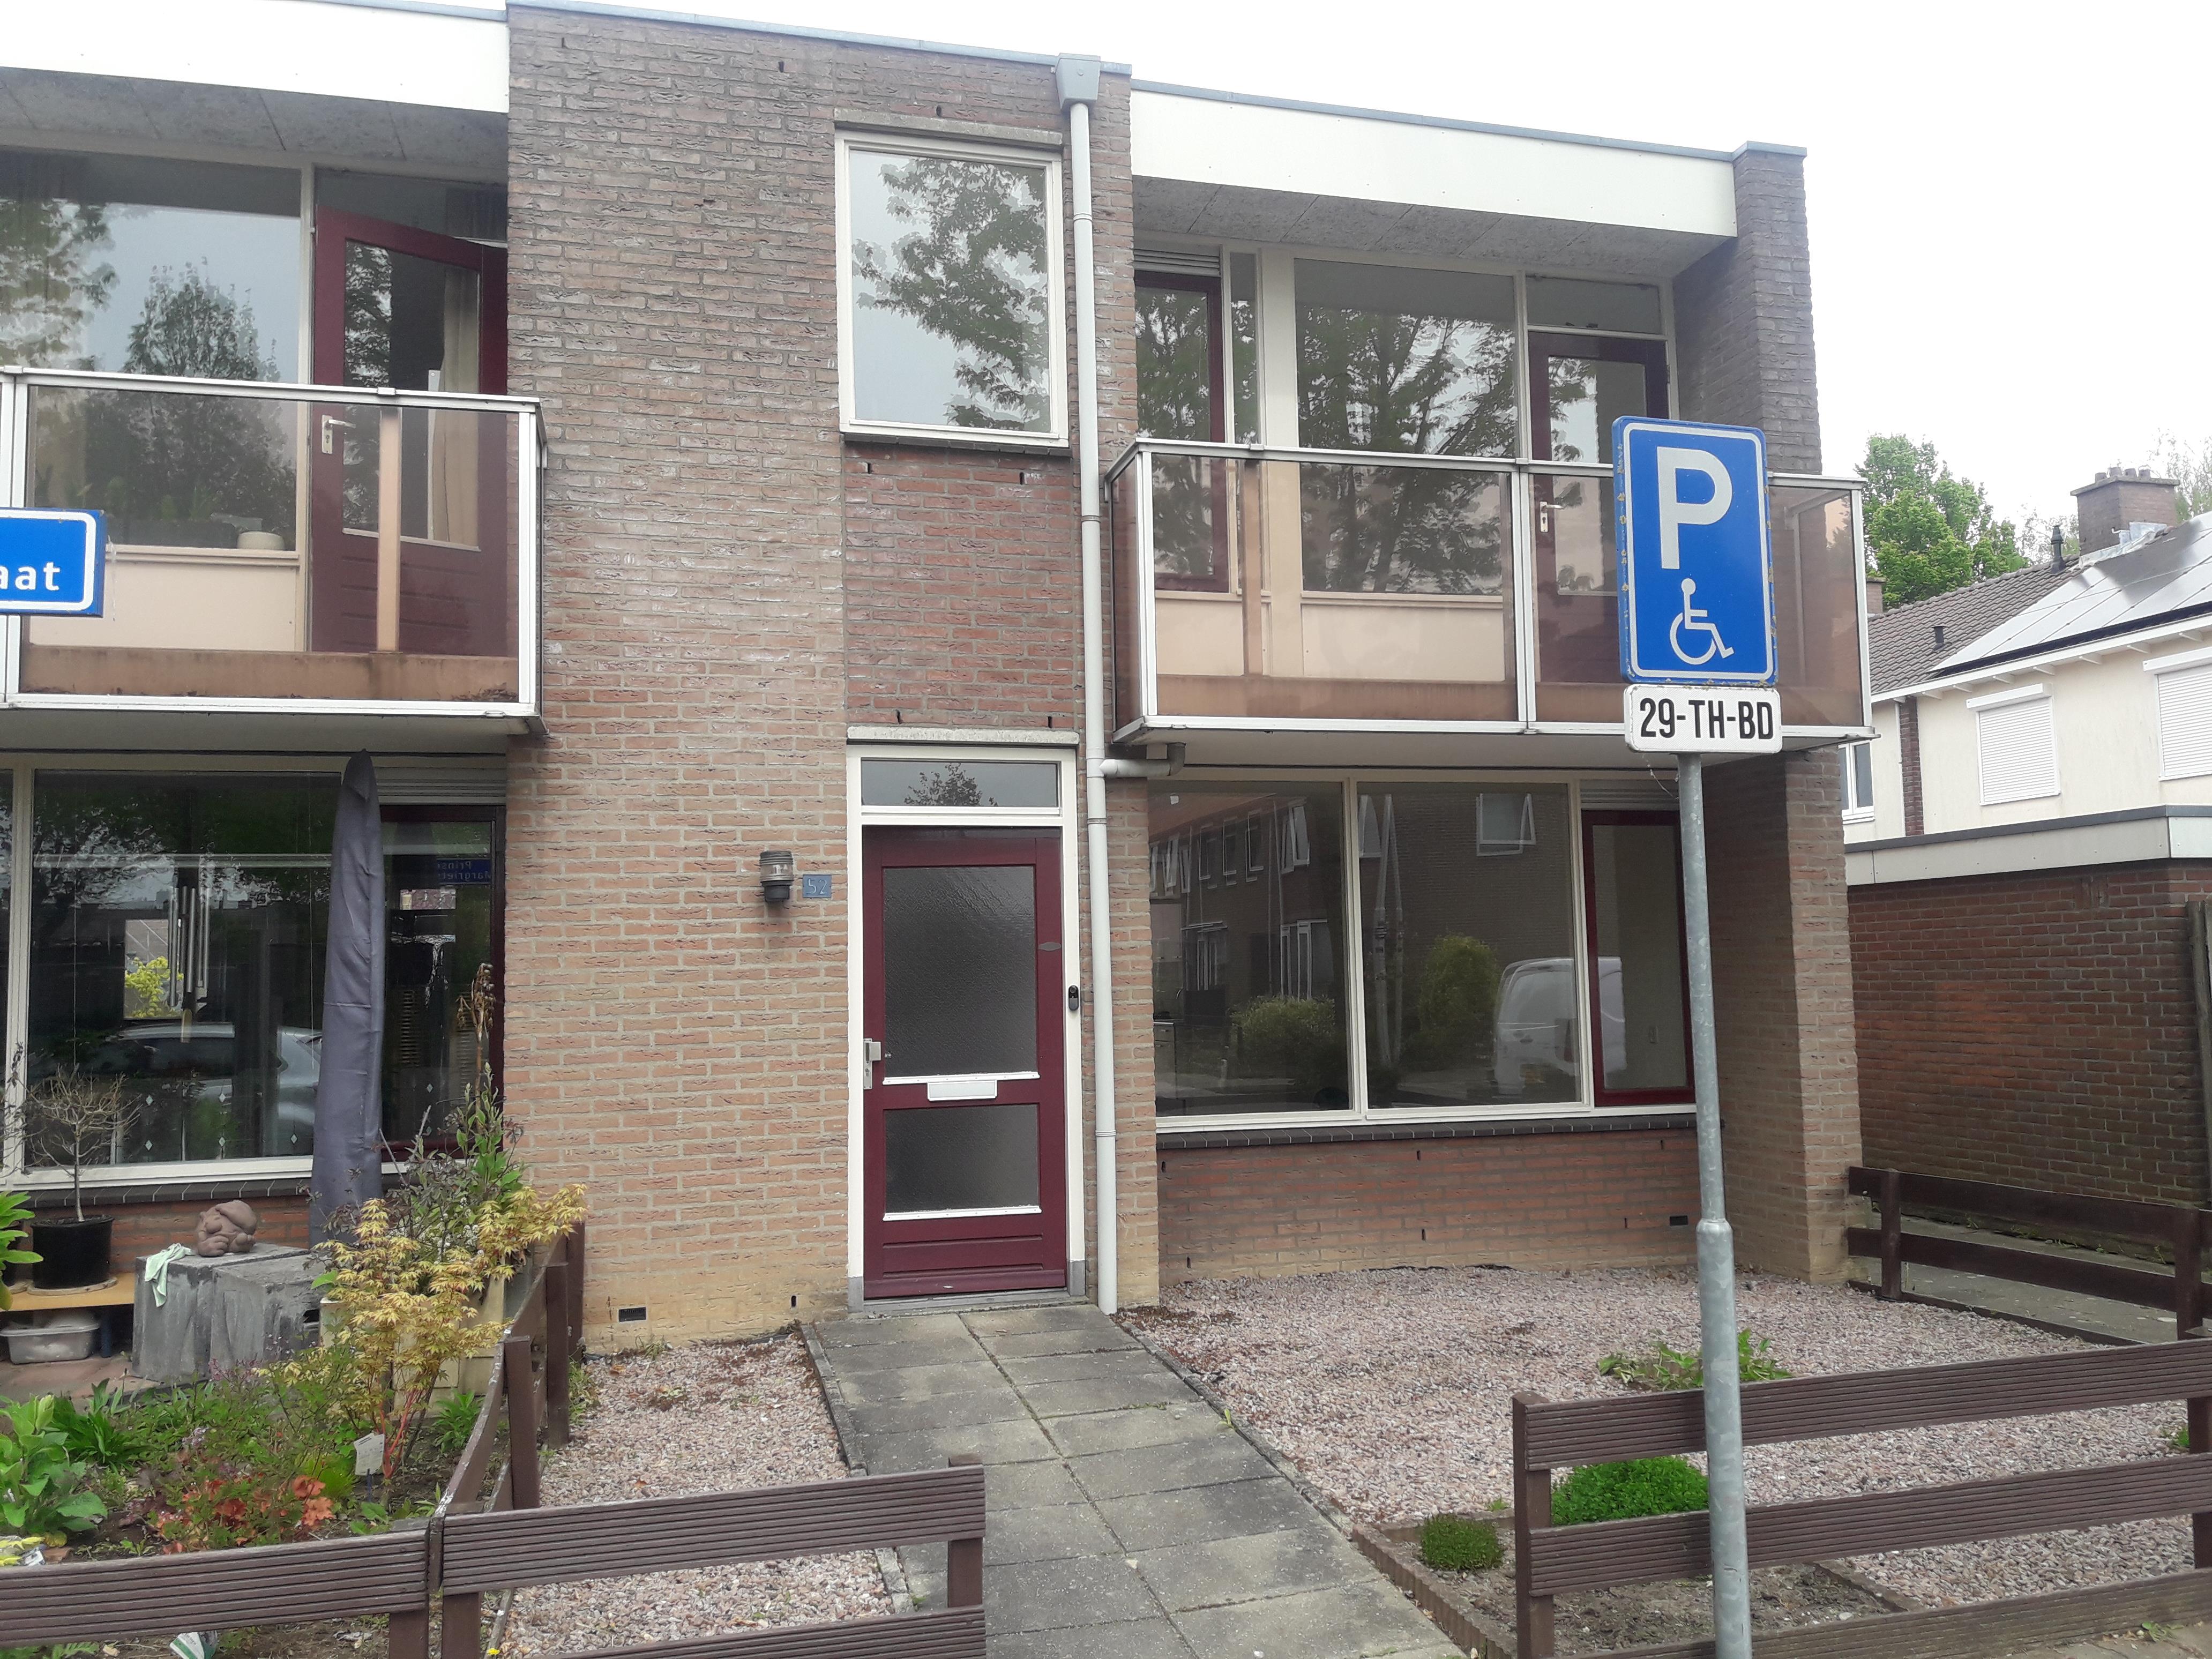 Pr. Margrietstraat 52, 6661 WZ Elst, Nederland